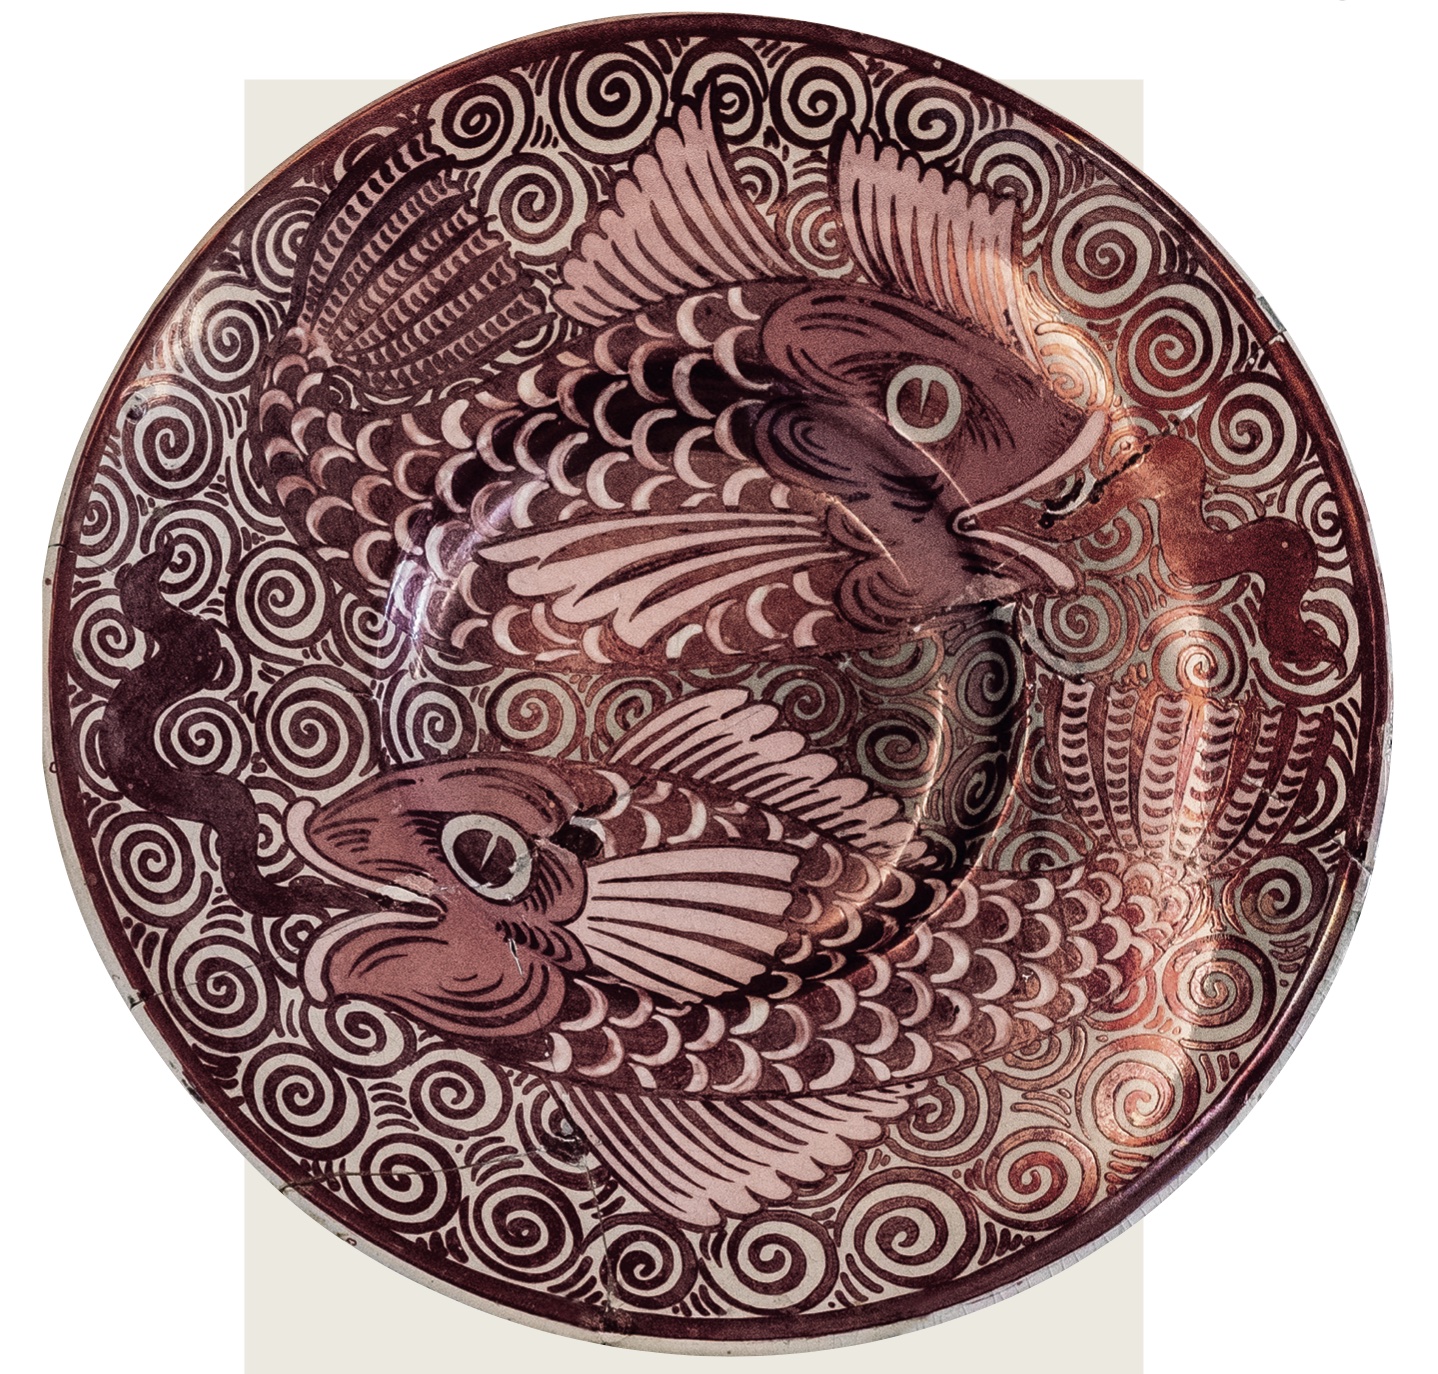 An antique ceramic plated designed by William de Morgan